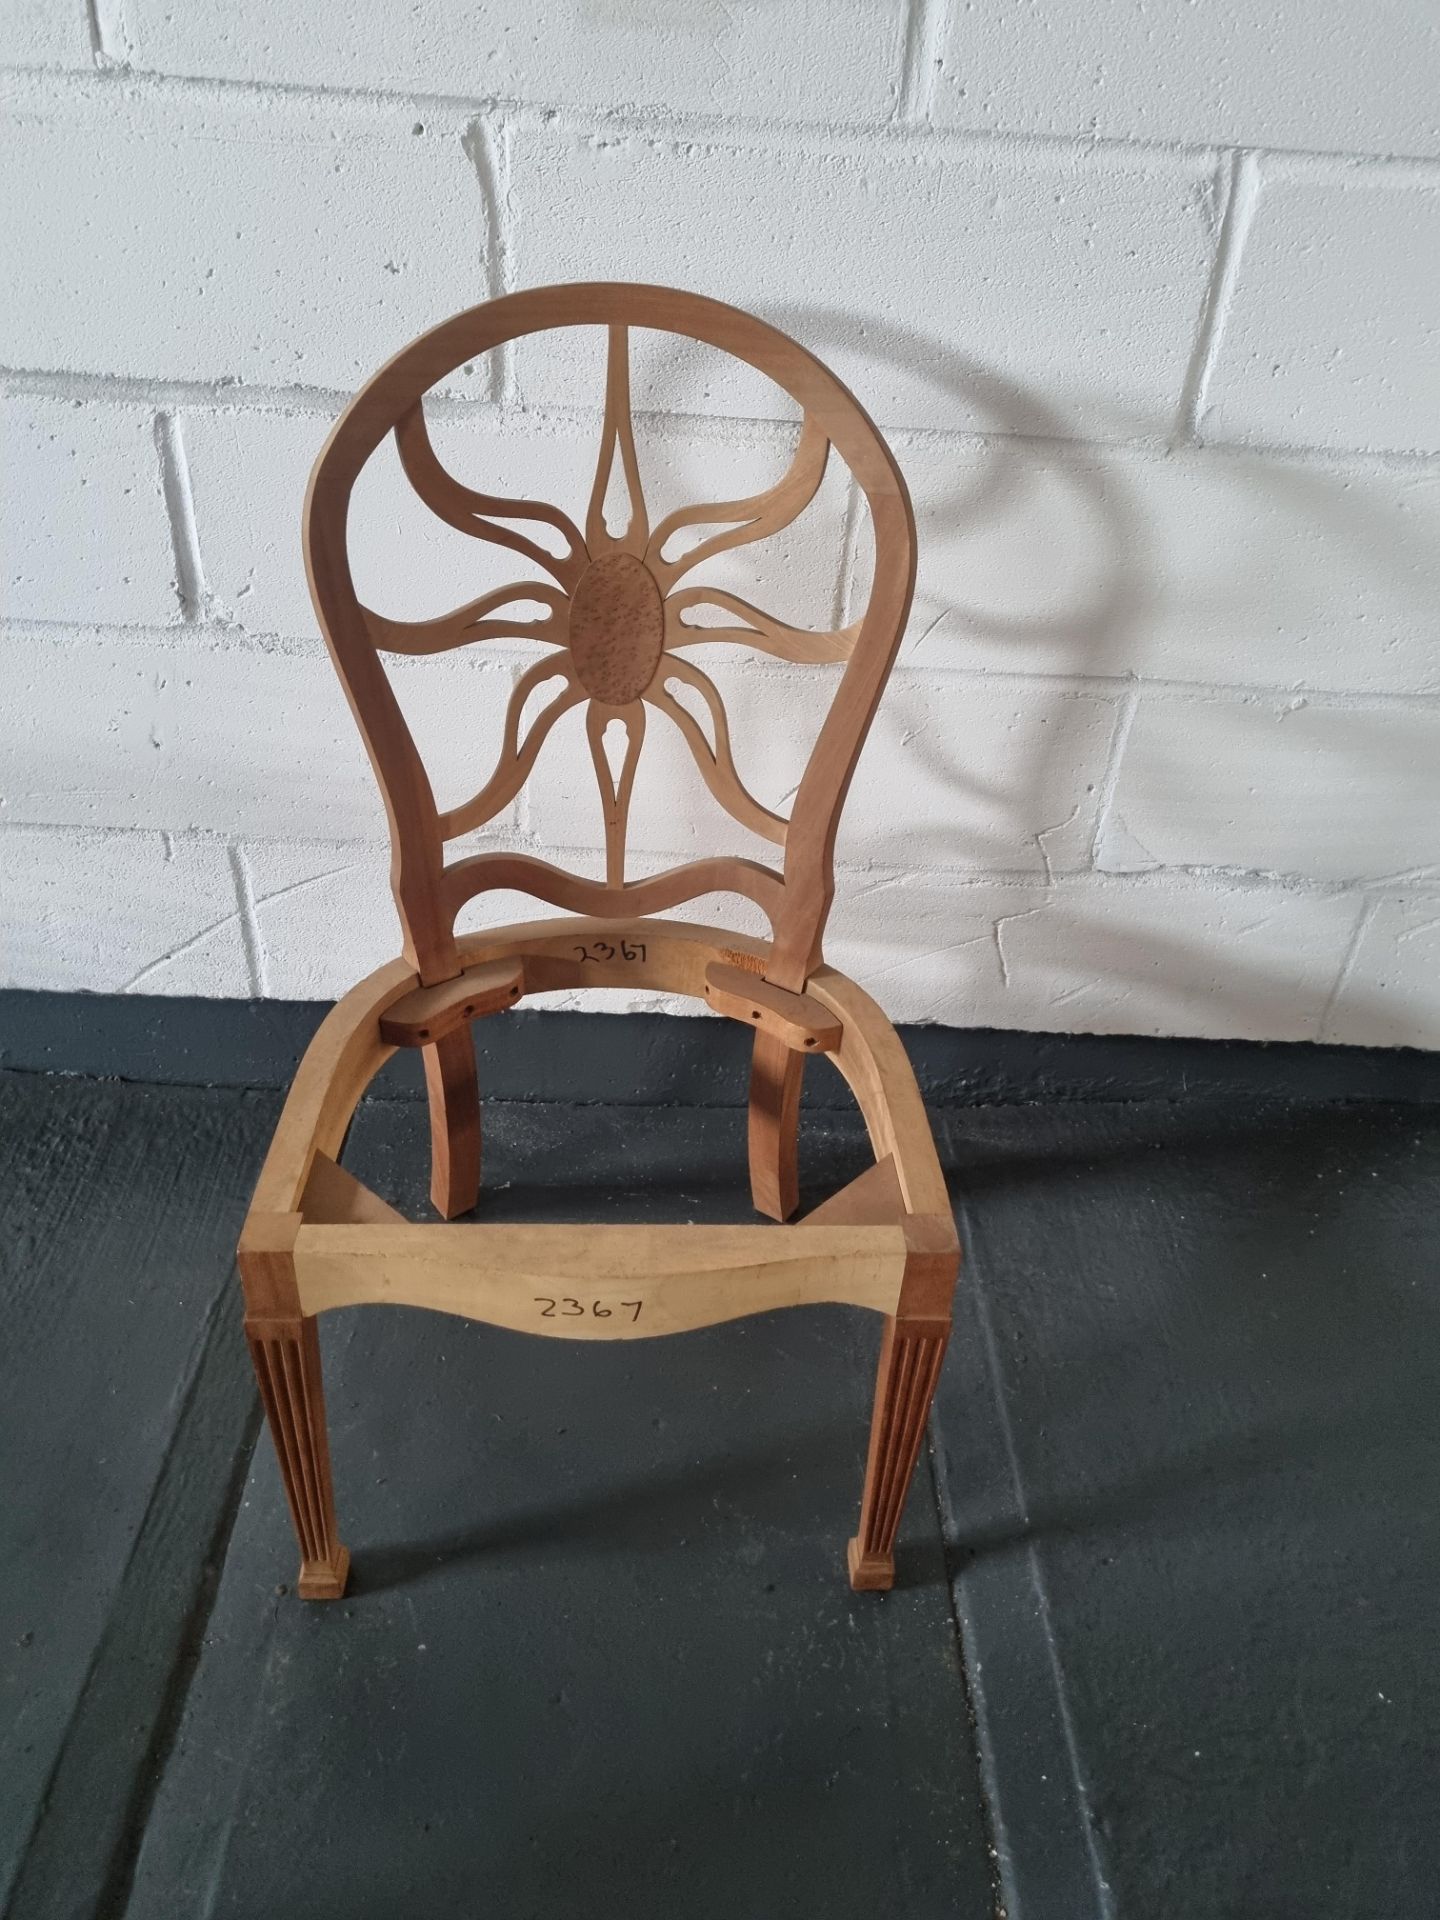 Arthur Brett Unupholstered & Unfinished Sunburst Side Chair George III Style The Unusual Design - Image 3 of 5